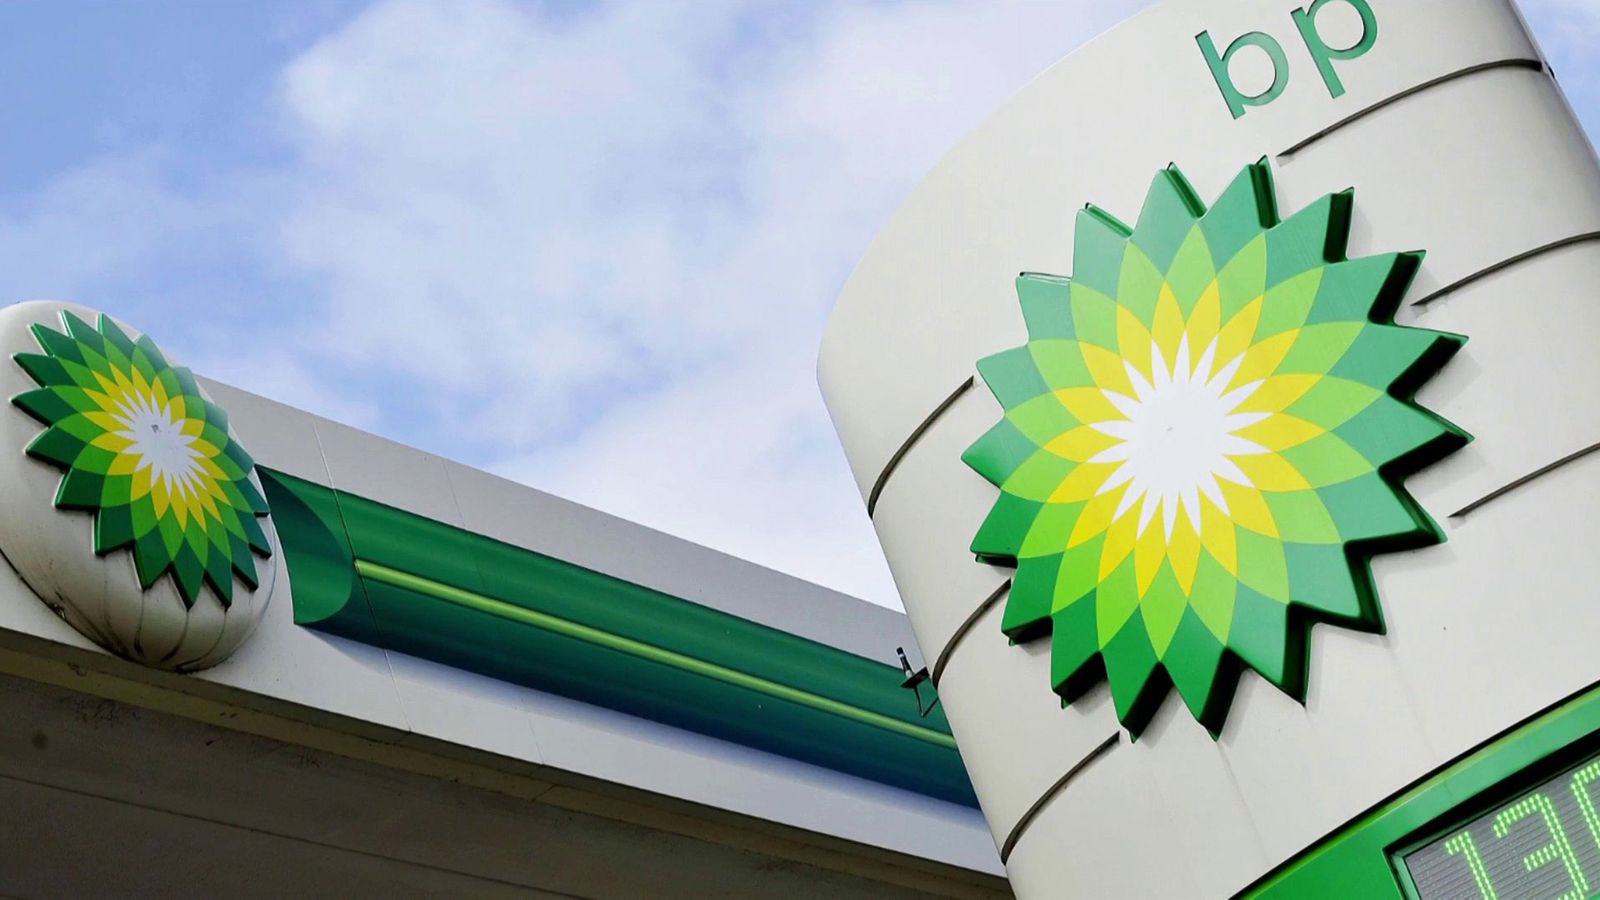 BP makes bn profit in first quarter as it steps up shareholder rewards